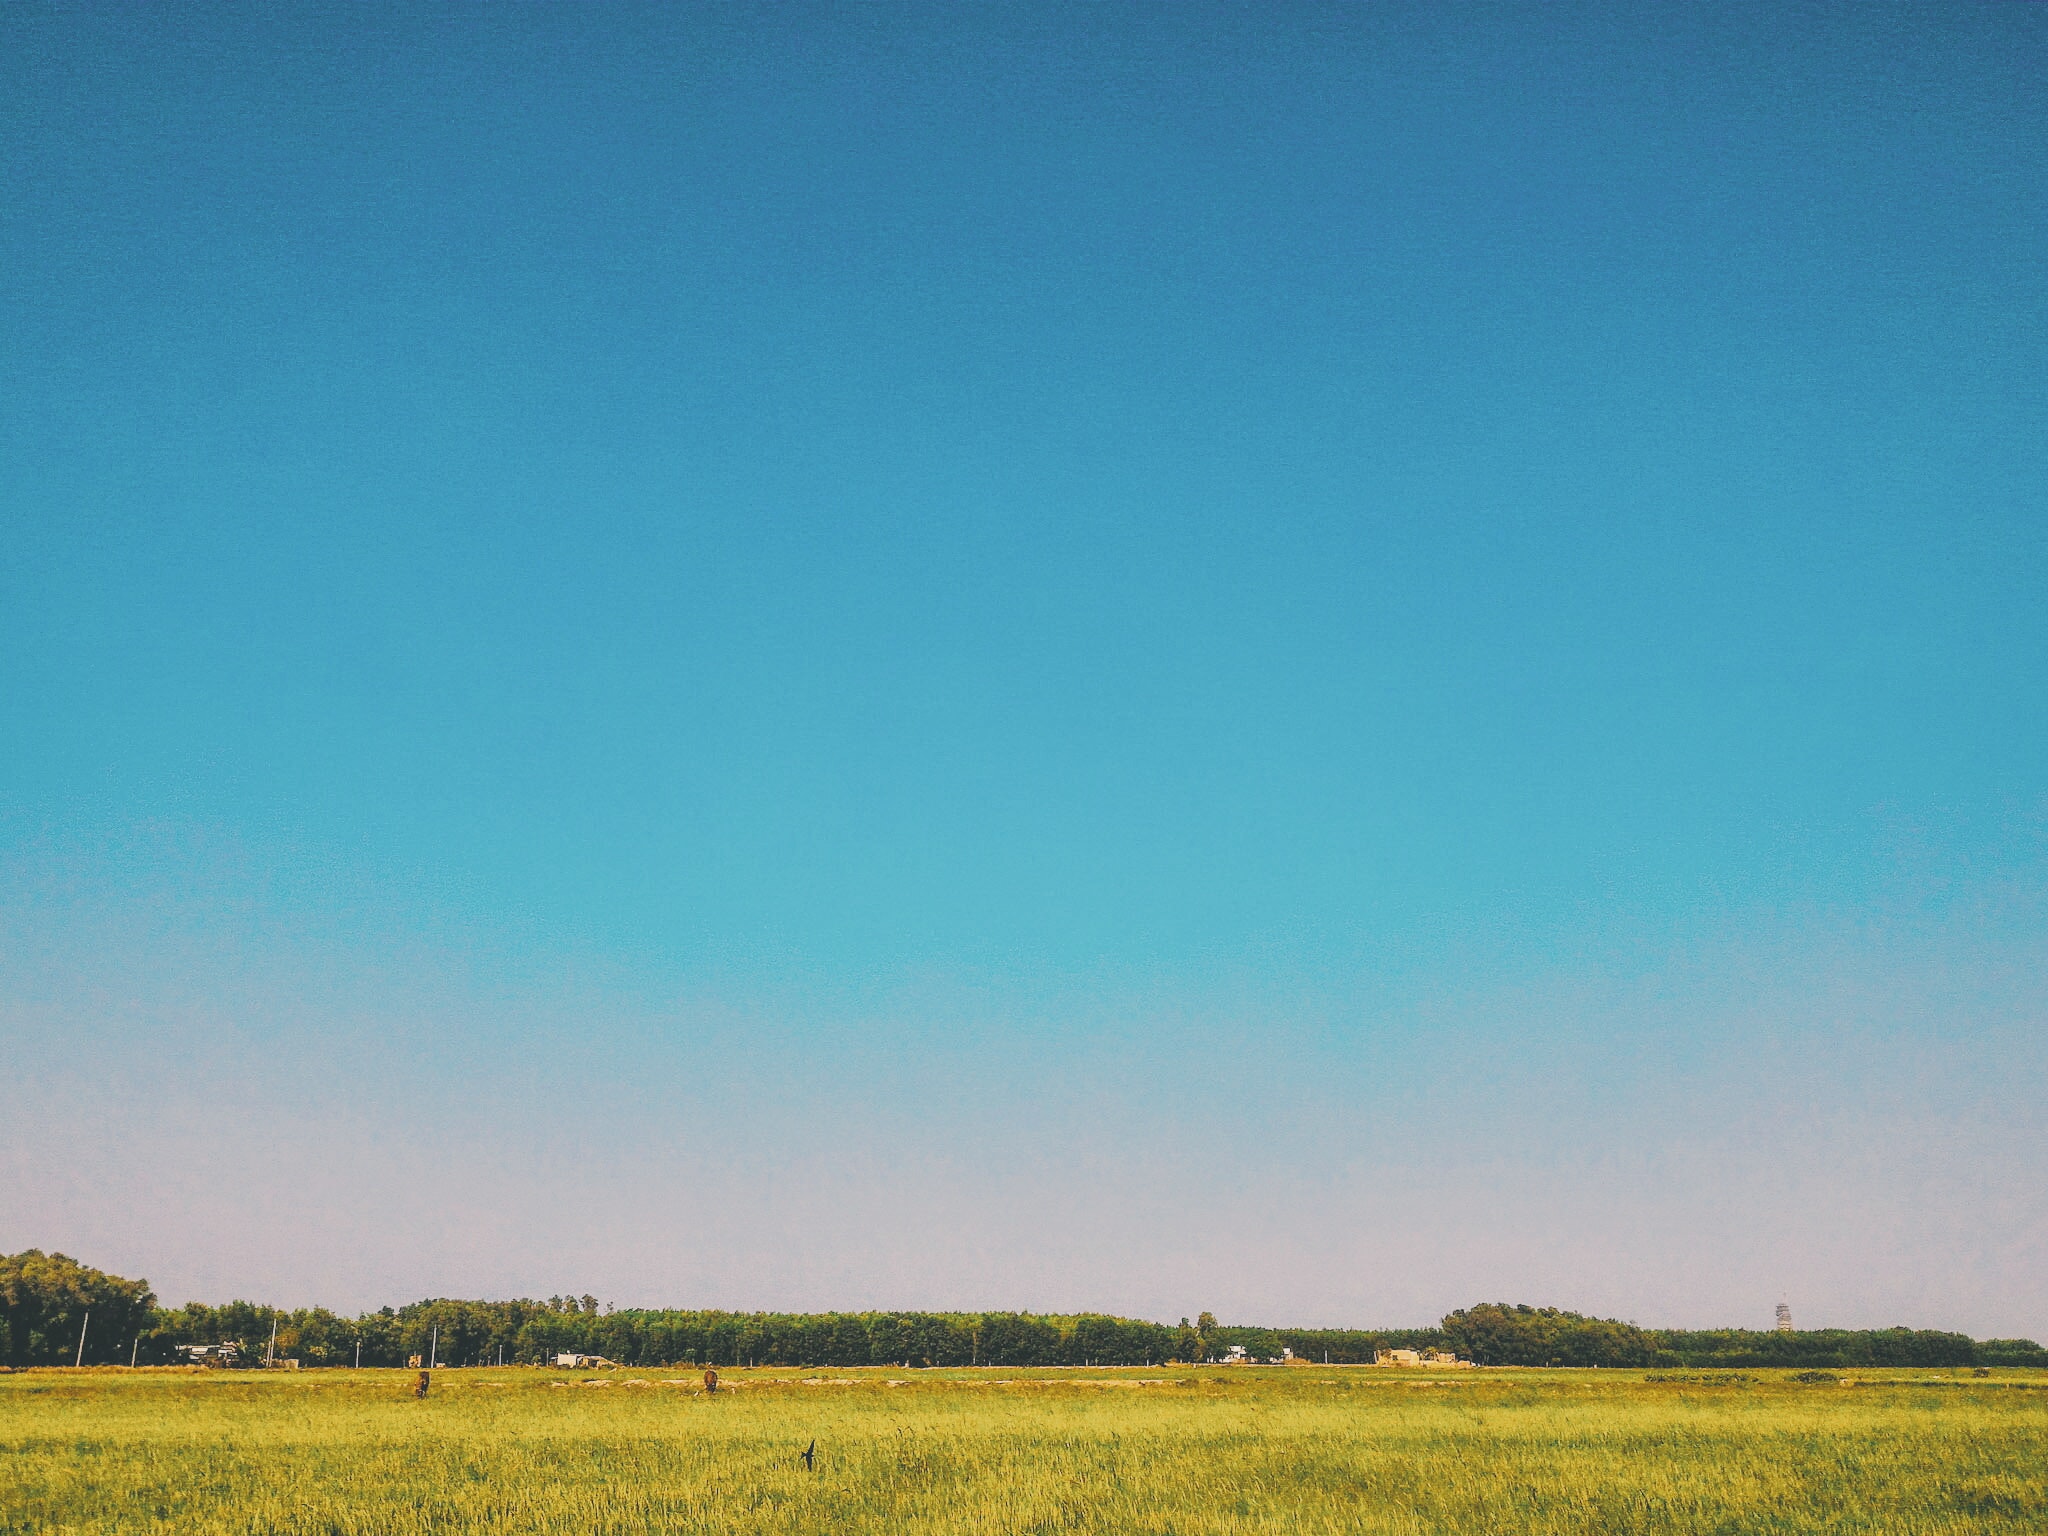 Grass field under blue sky at daytime photo